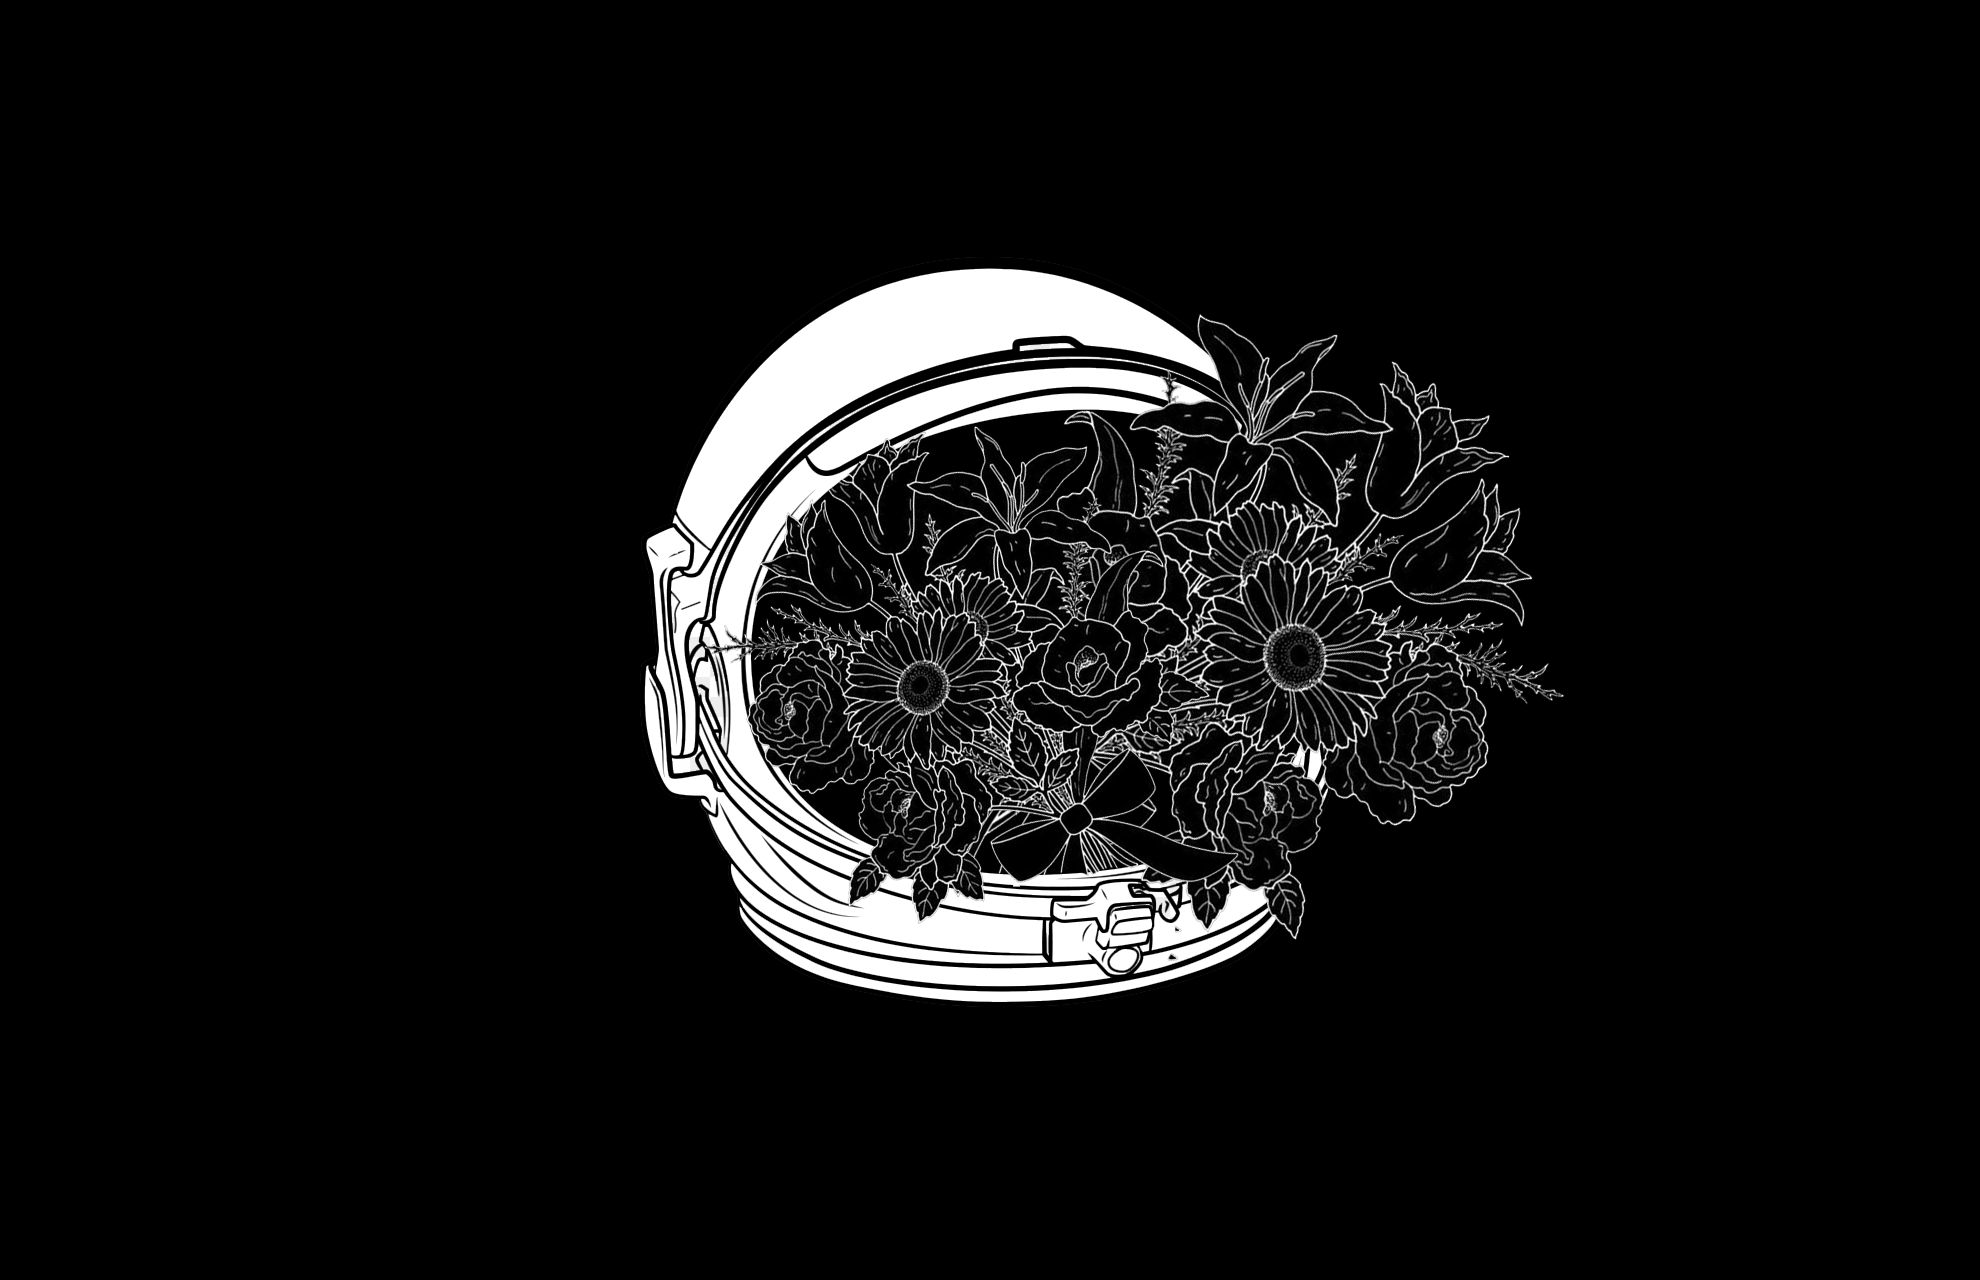 General 1980x1280 helmet astronaut monochrome flowers drawing